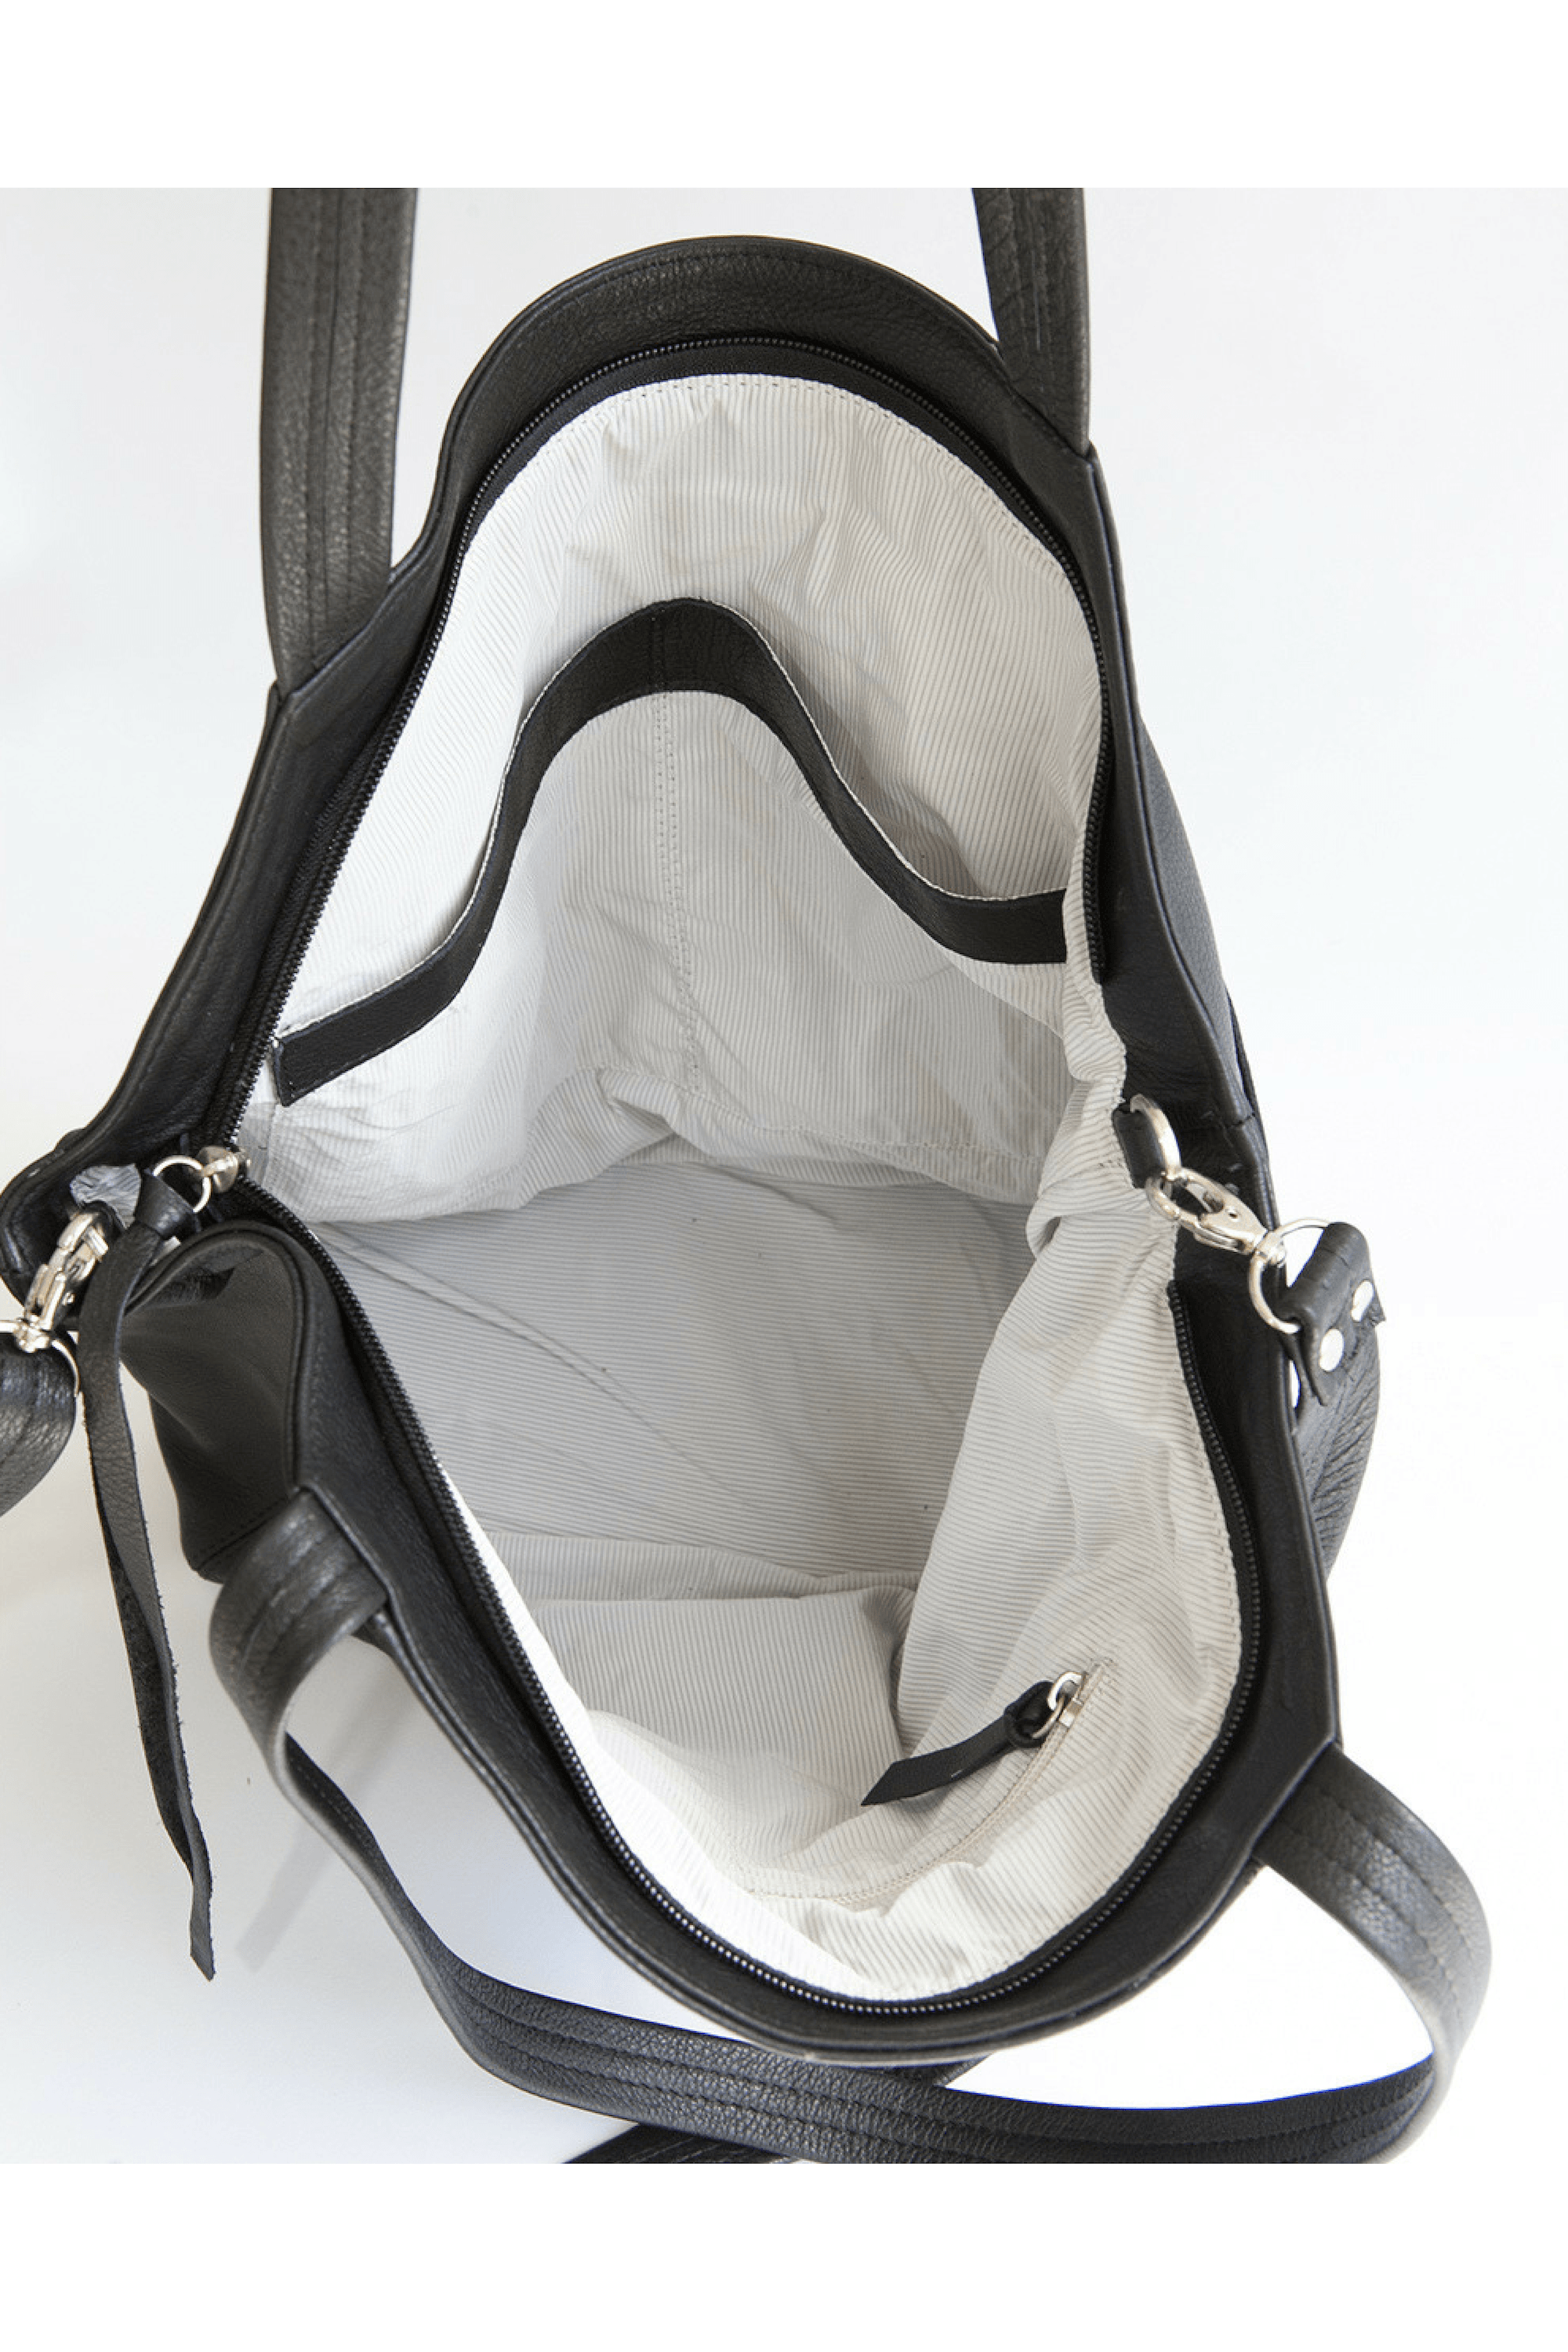 QOECI Genuine Leather Tote Bag for Women with Zipper Large Women's Shoulder  Handbags Designer Crossbody Bags Top Handle Purse